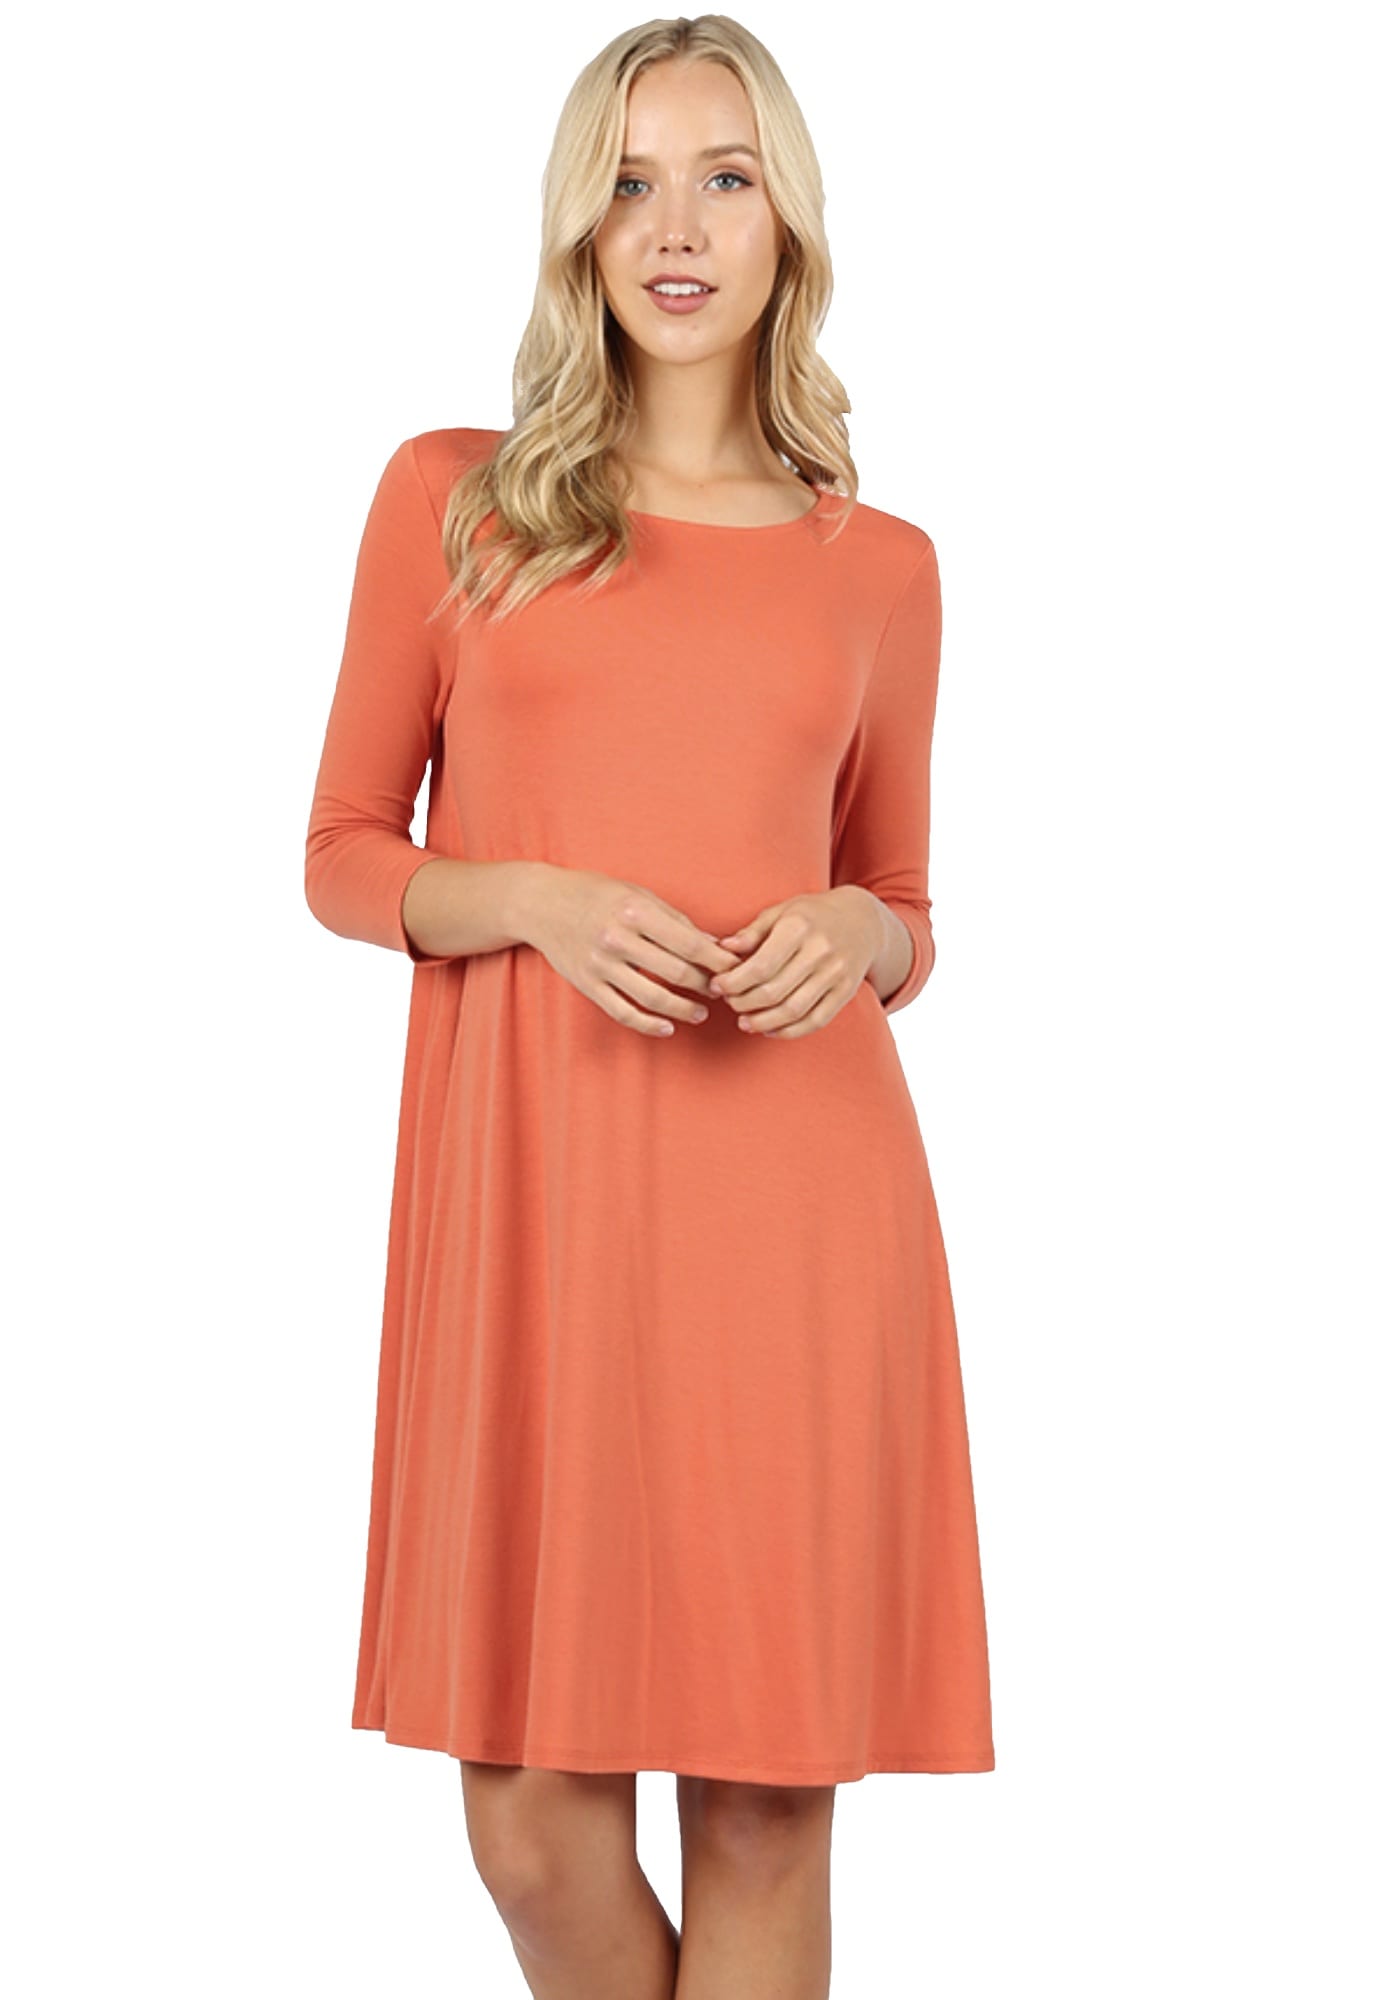 Premium Fabric 3/4 Sleeve Flare Dress W/ Pockets - $0.00 - KoaJoa.com